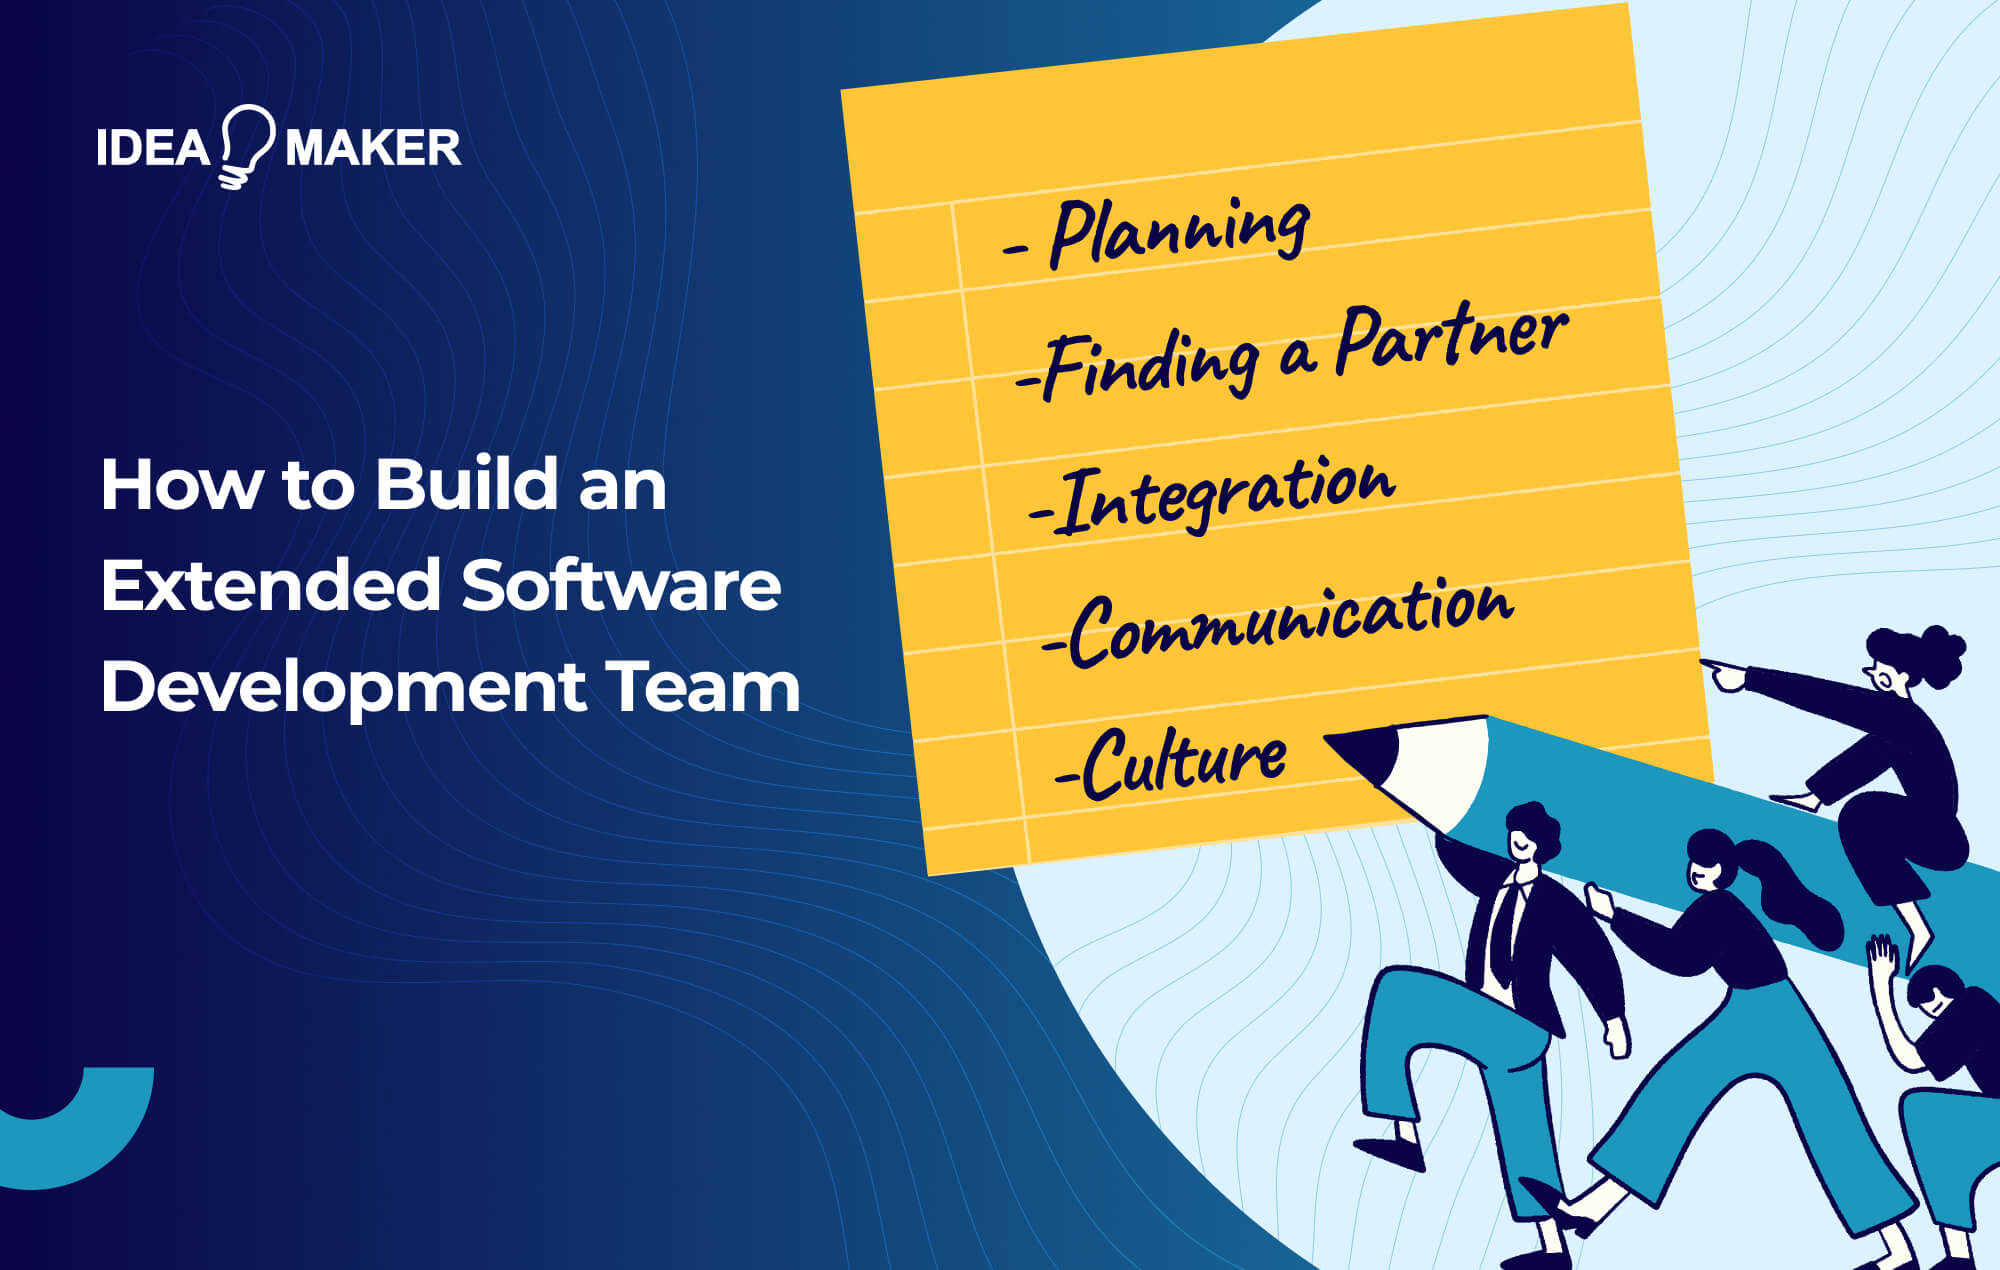 Ideamaker - How to Build an Extended Software Development Team